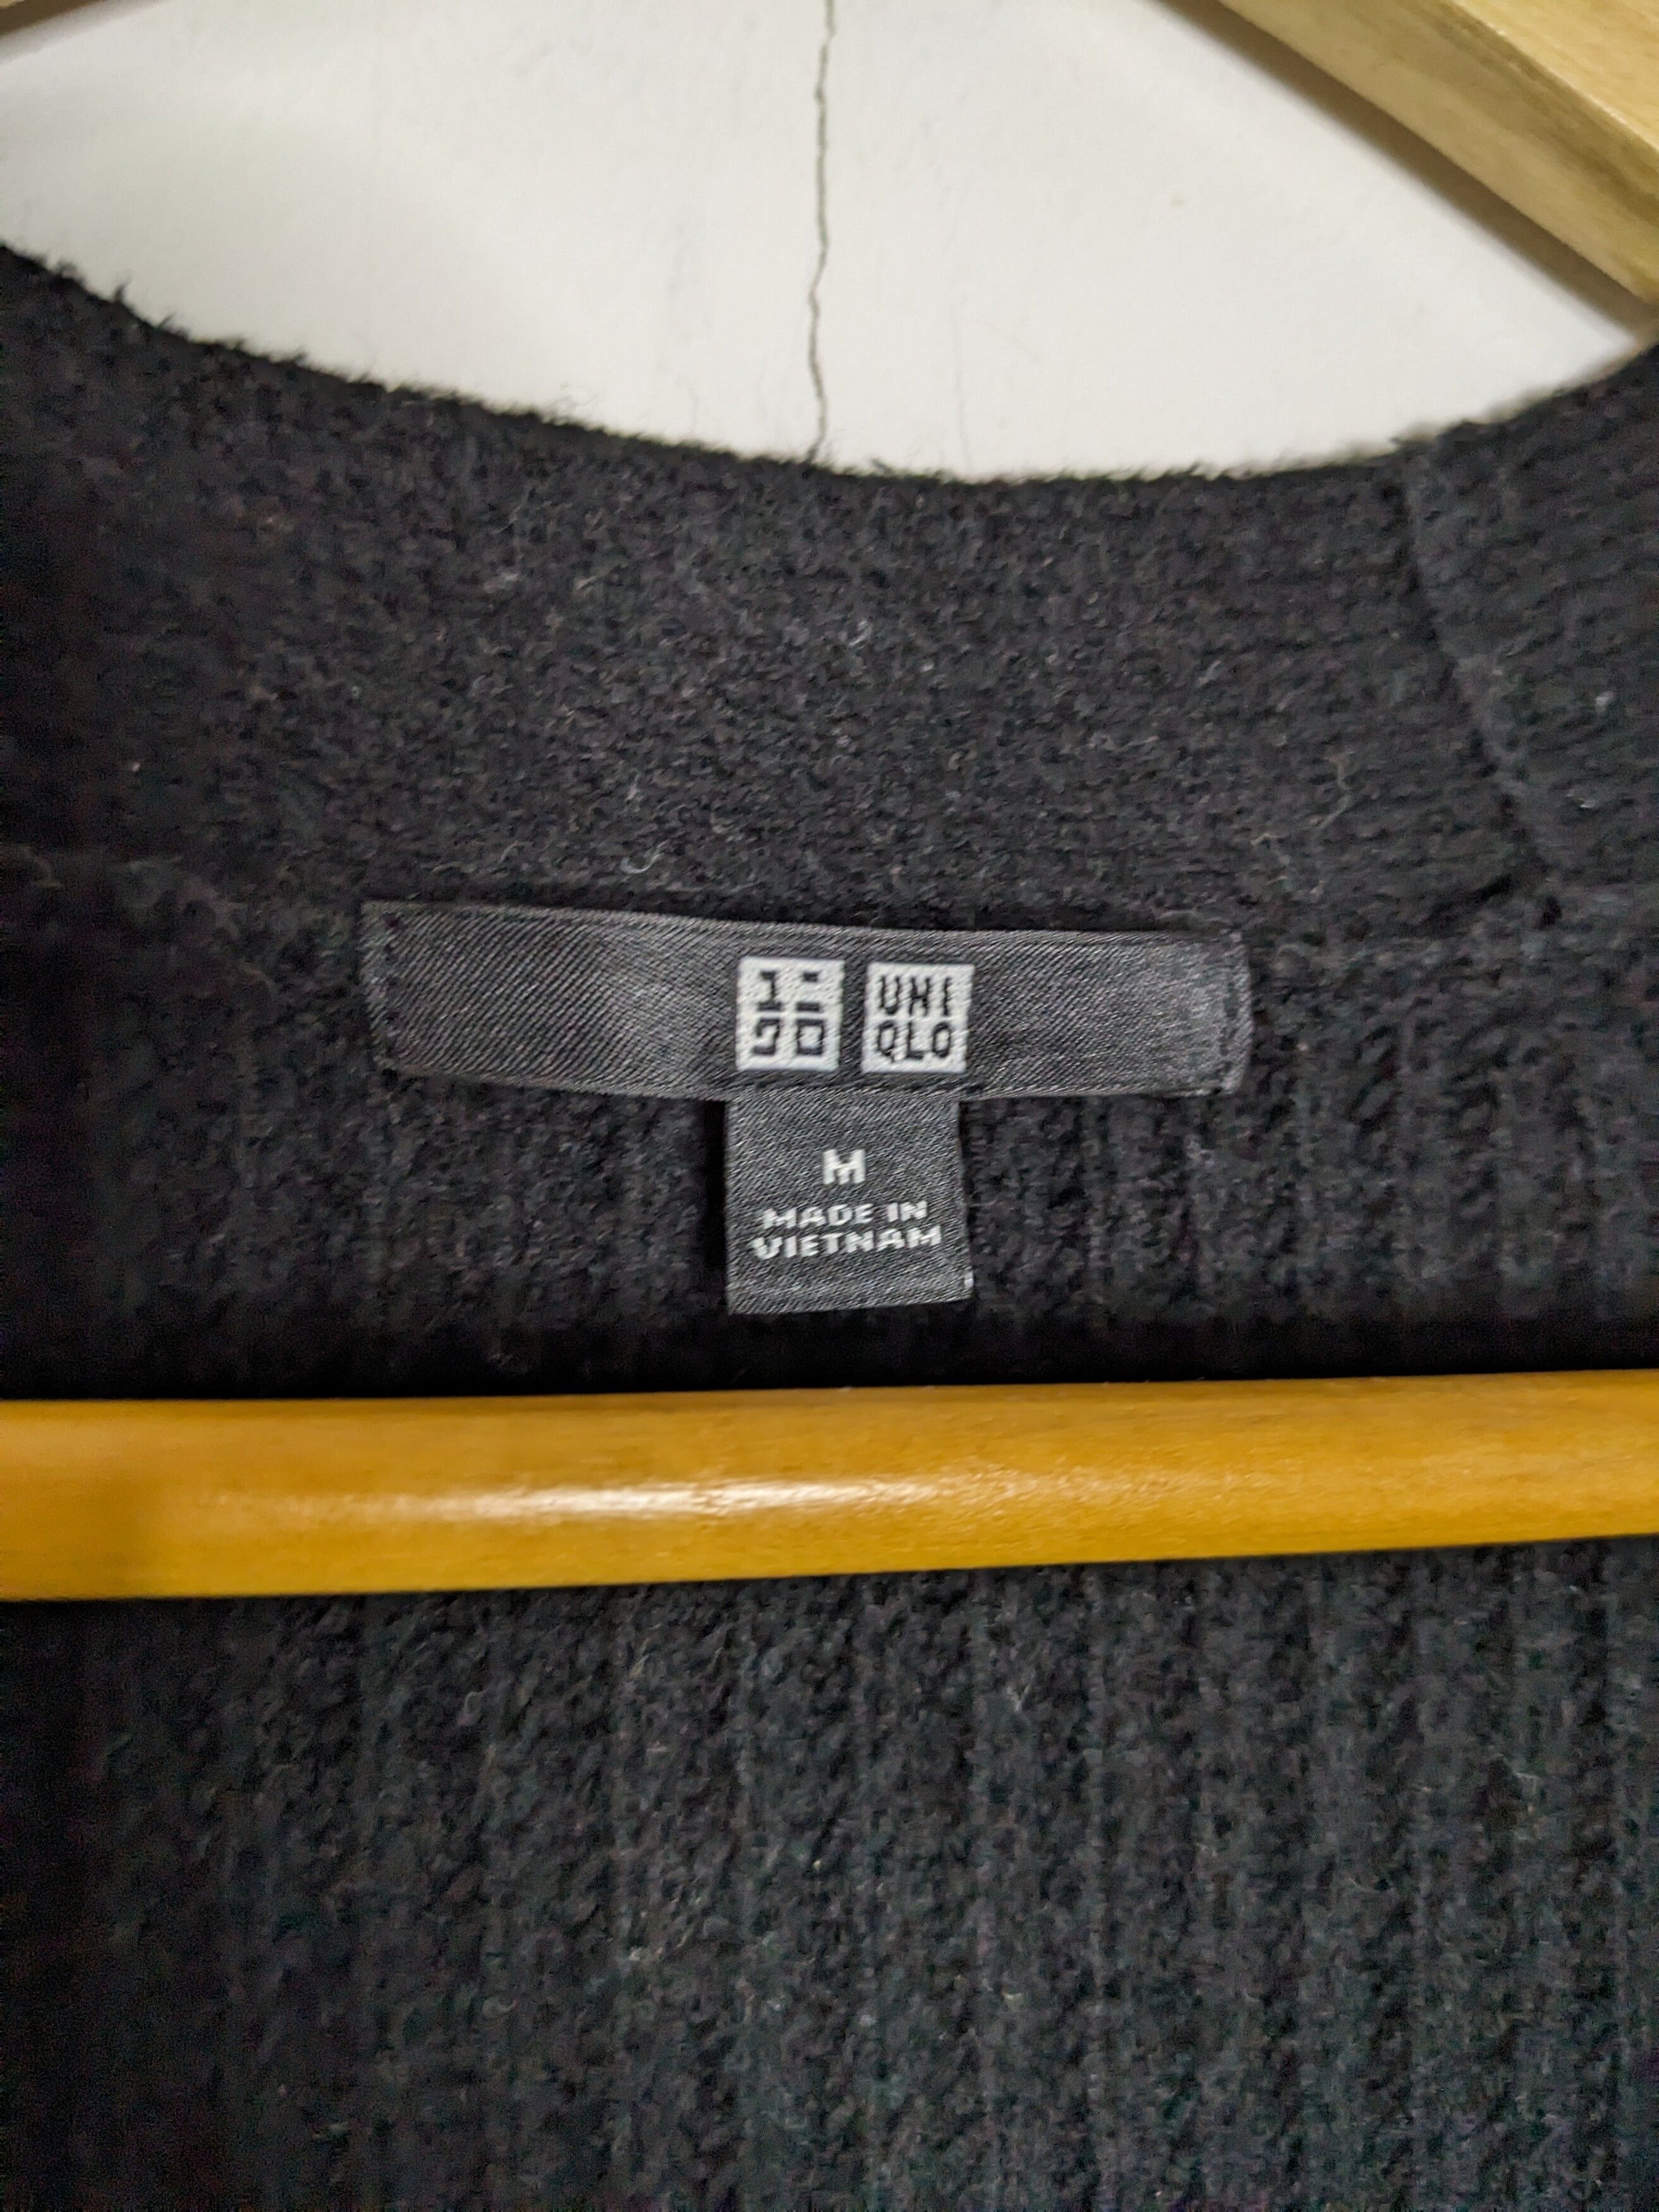 Uniqlo Crocheted Pattern Cotton Knit Sweater Black Cardigan - 6